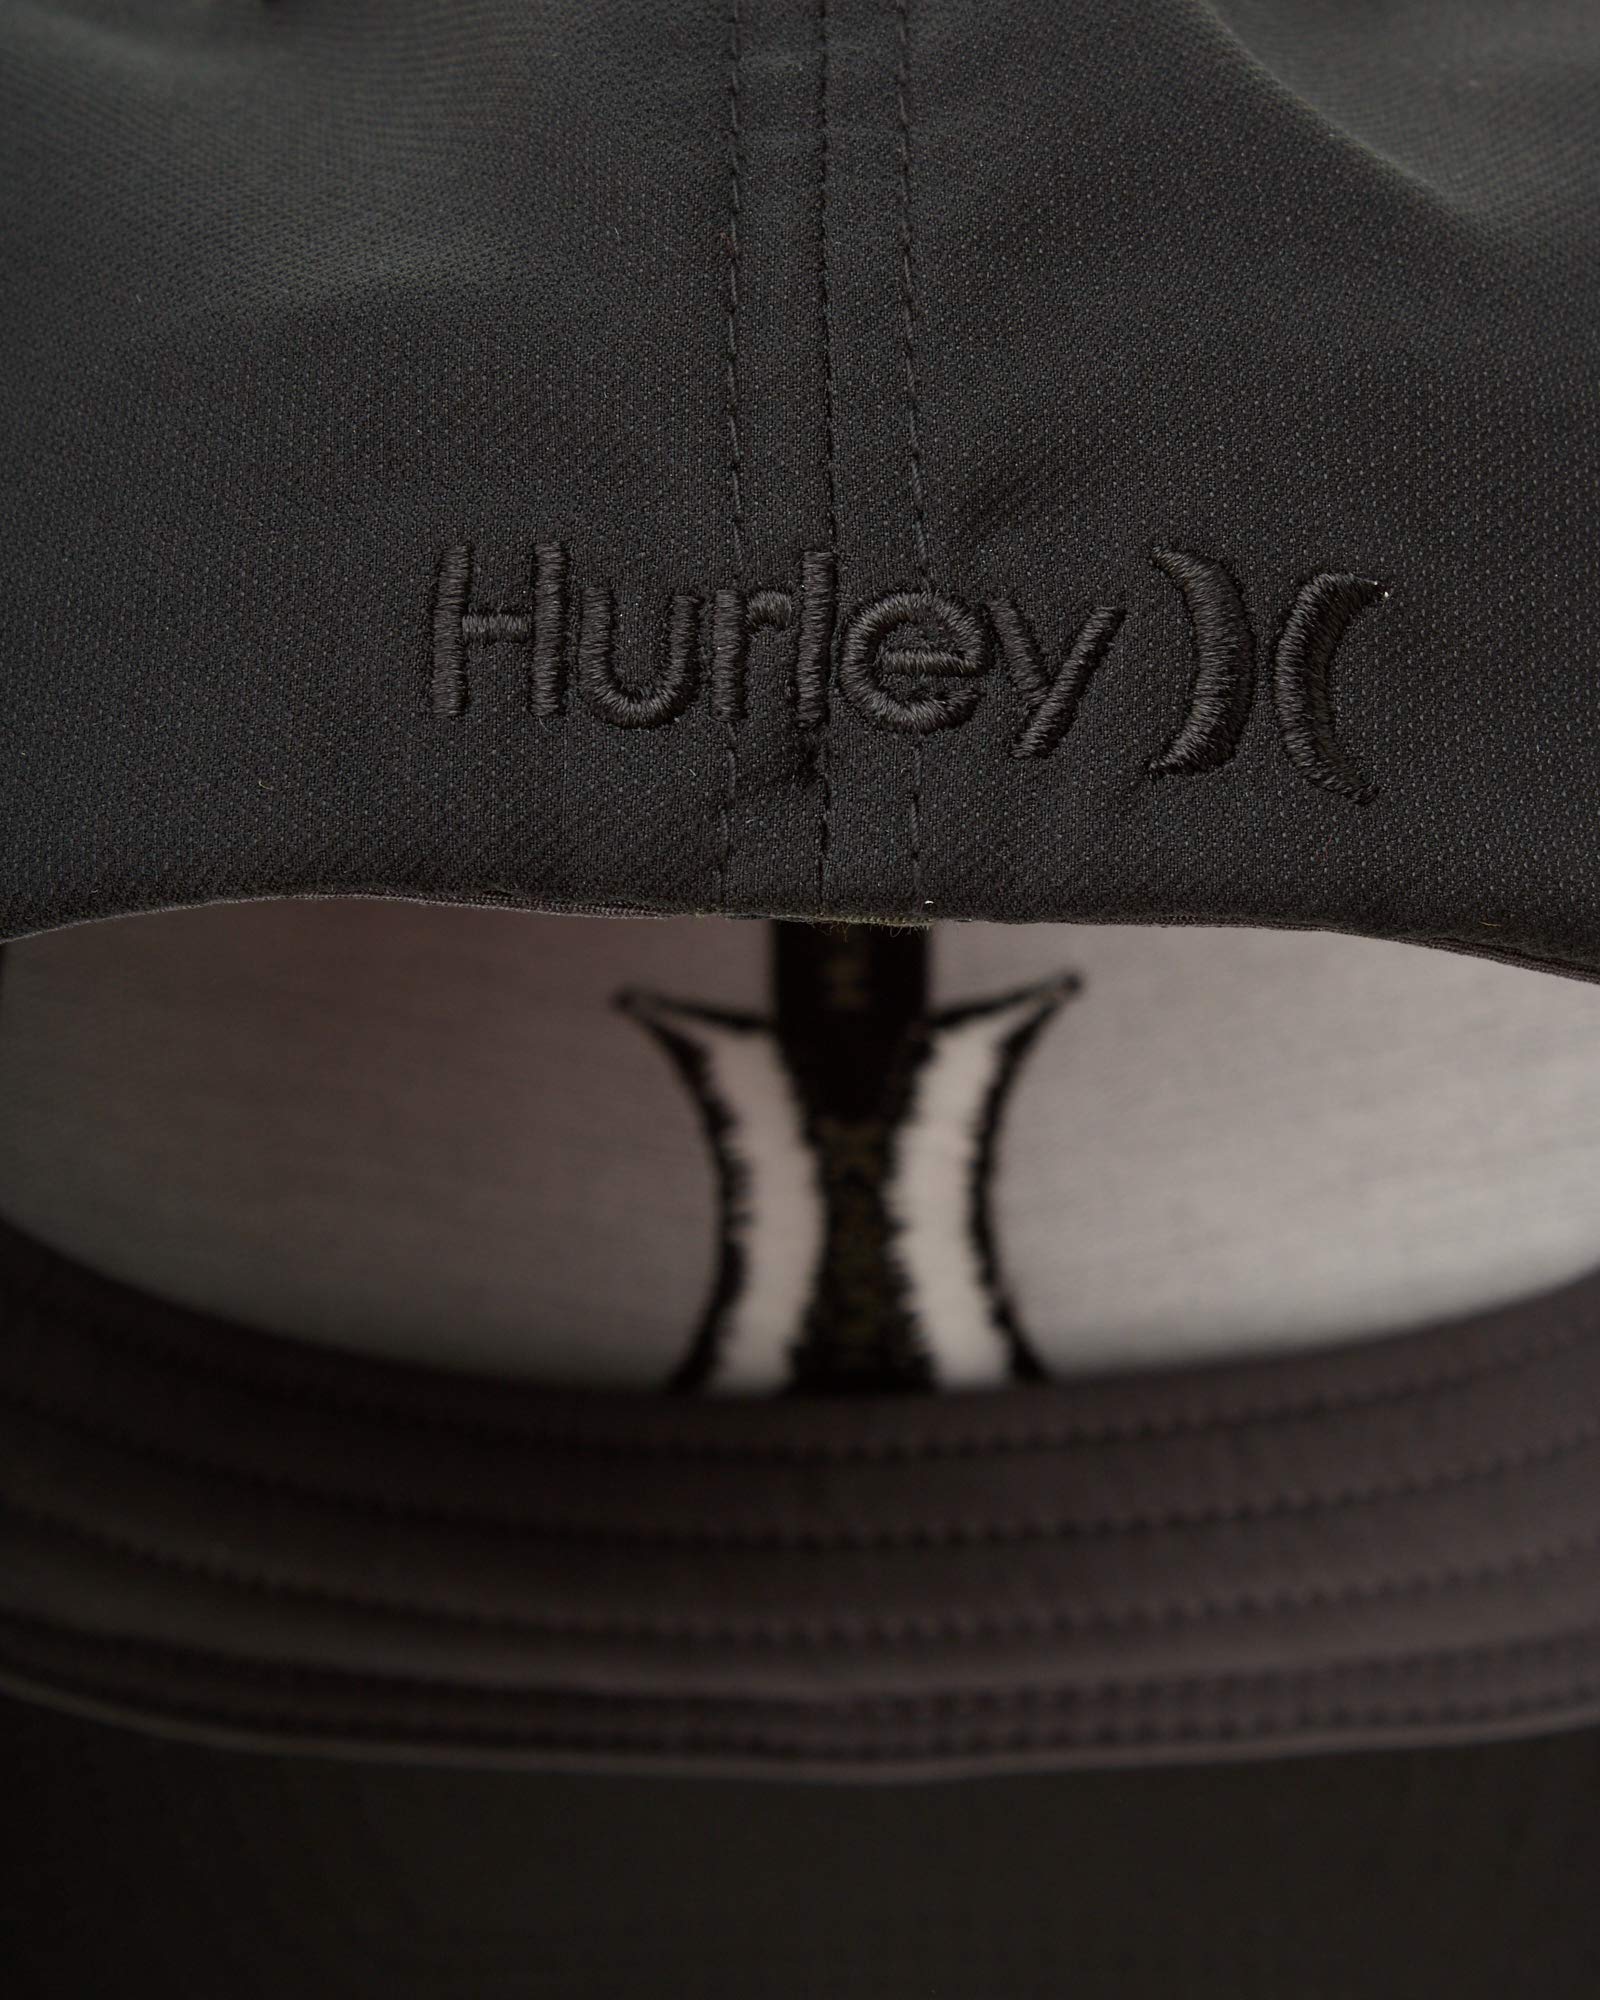 Hurley Men's Dri-Fit One & Only Flexfit Baseball Cap, Black/Black, L-XL